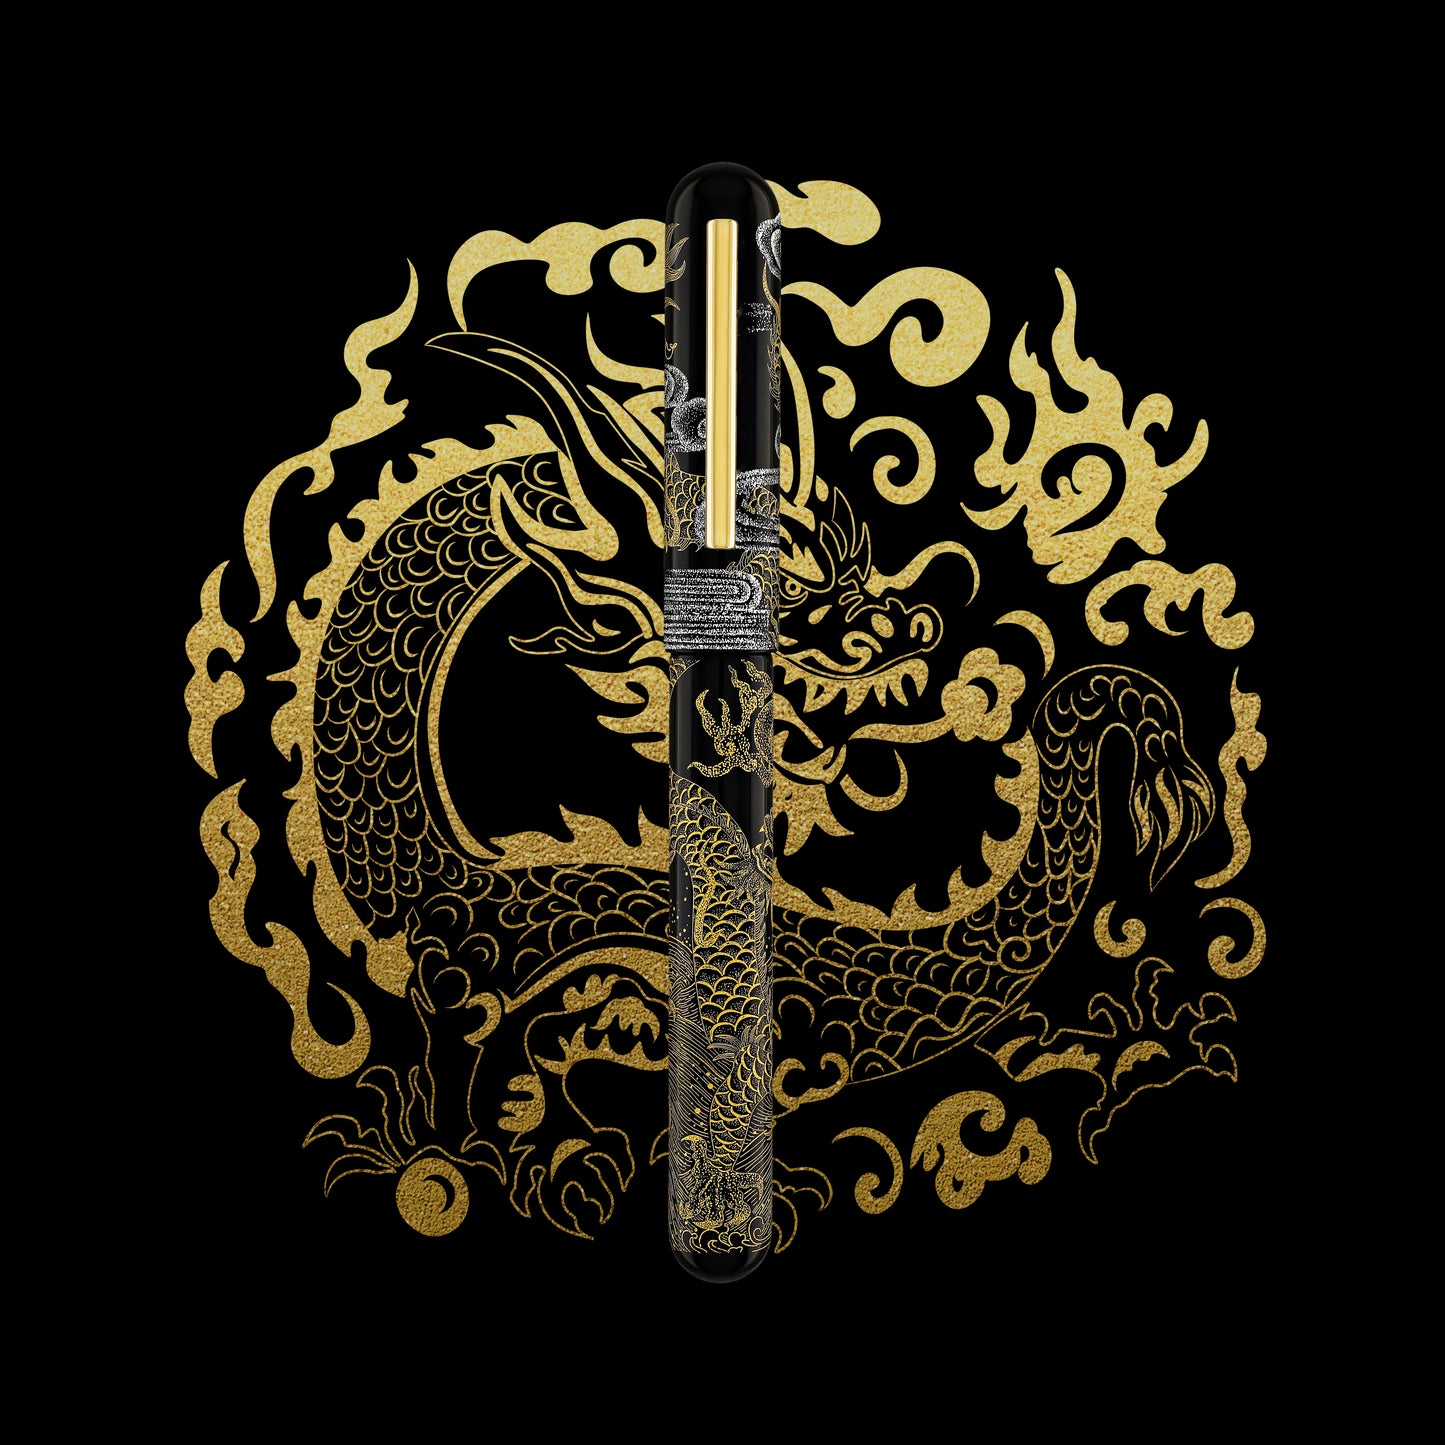 
                  
                    IKKAKU by Nahvalur 盘龙 Pan-Long (Coiling Dragon) Chinkin Pen
                  
                